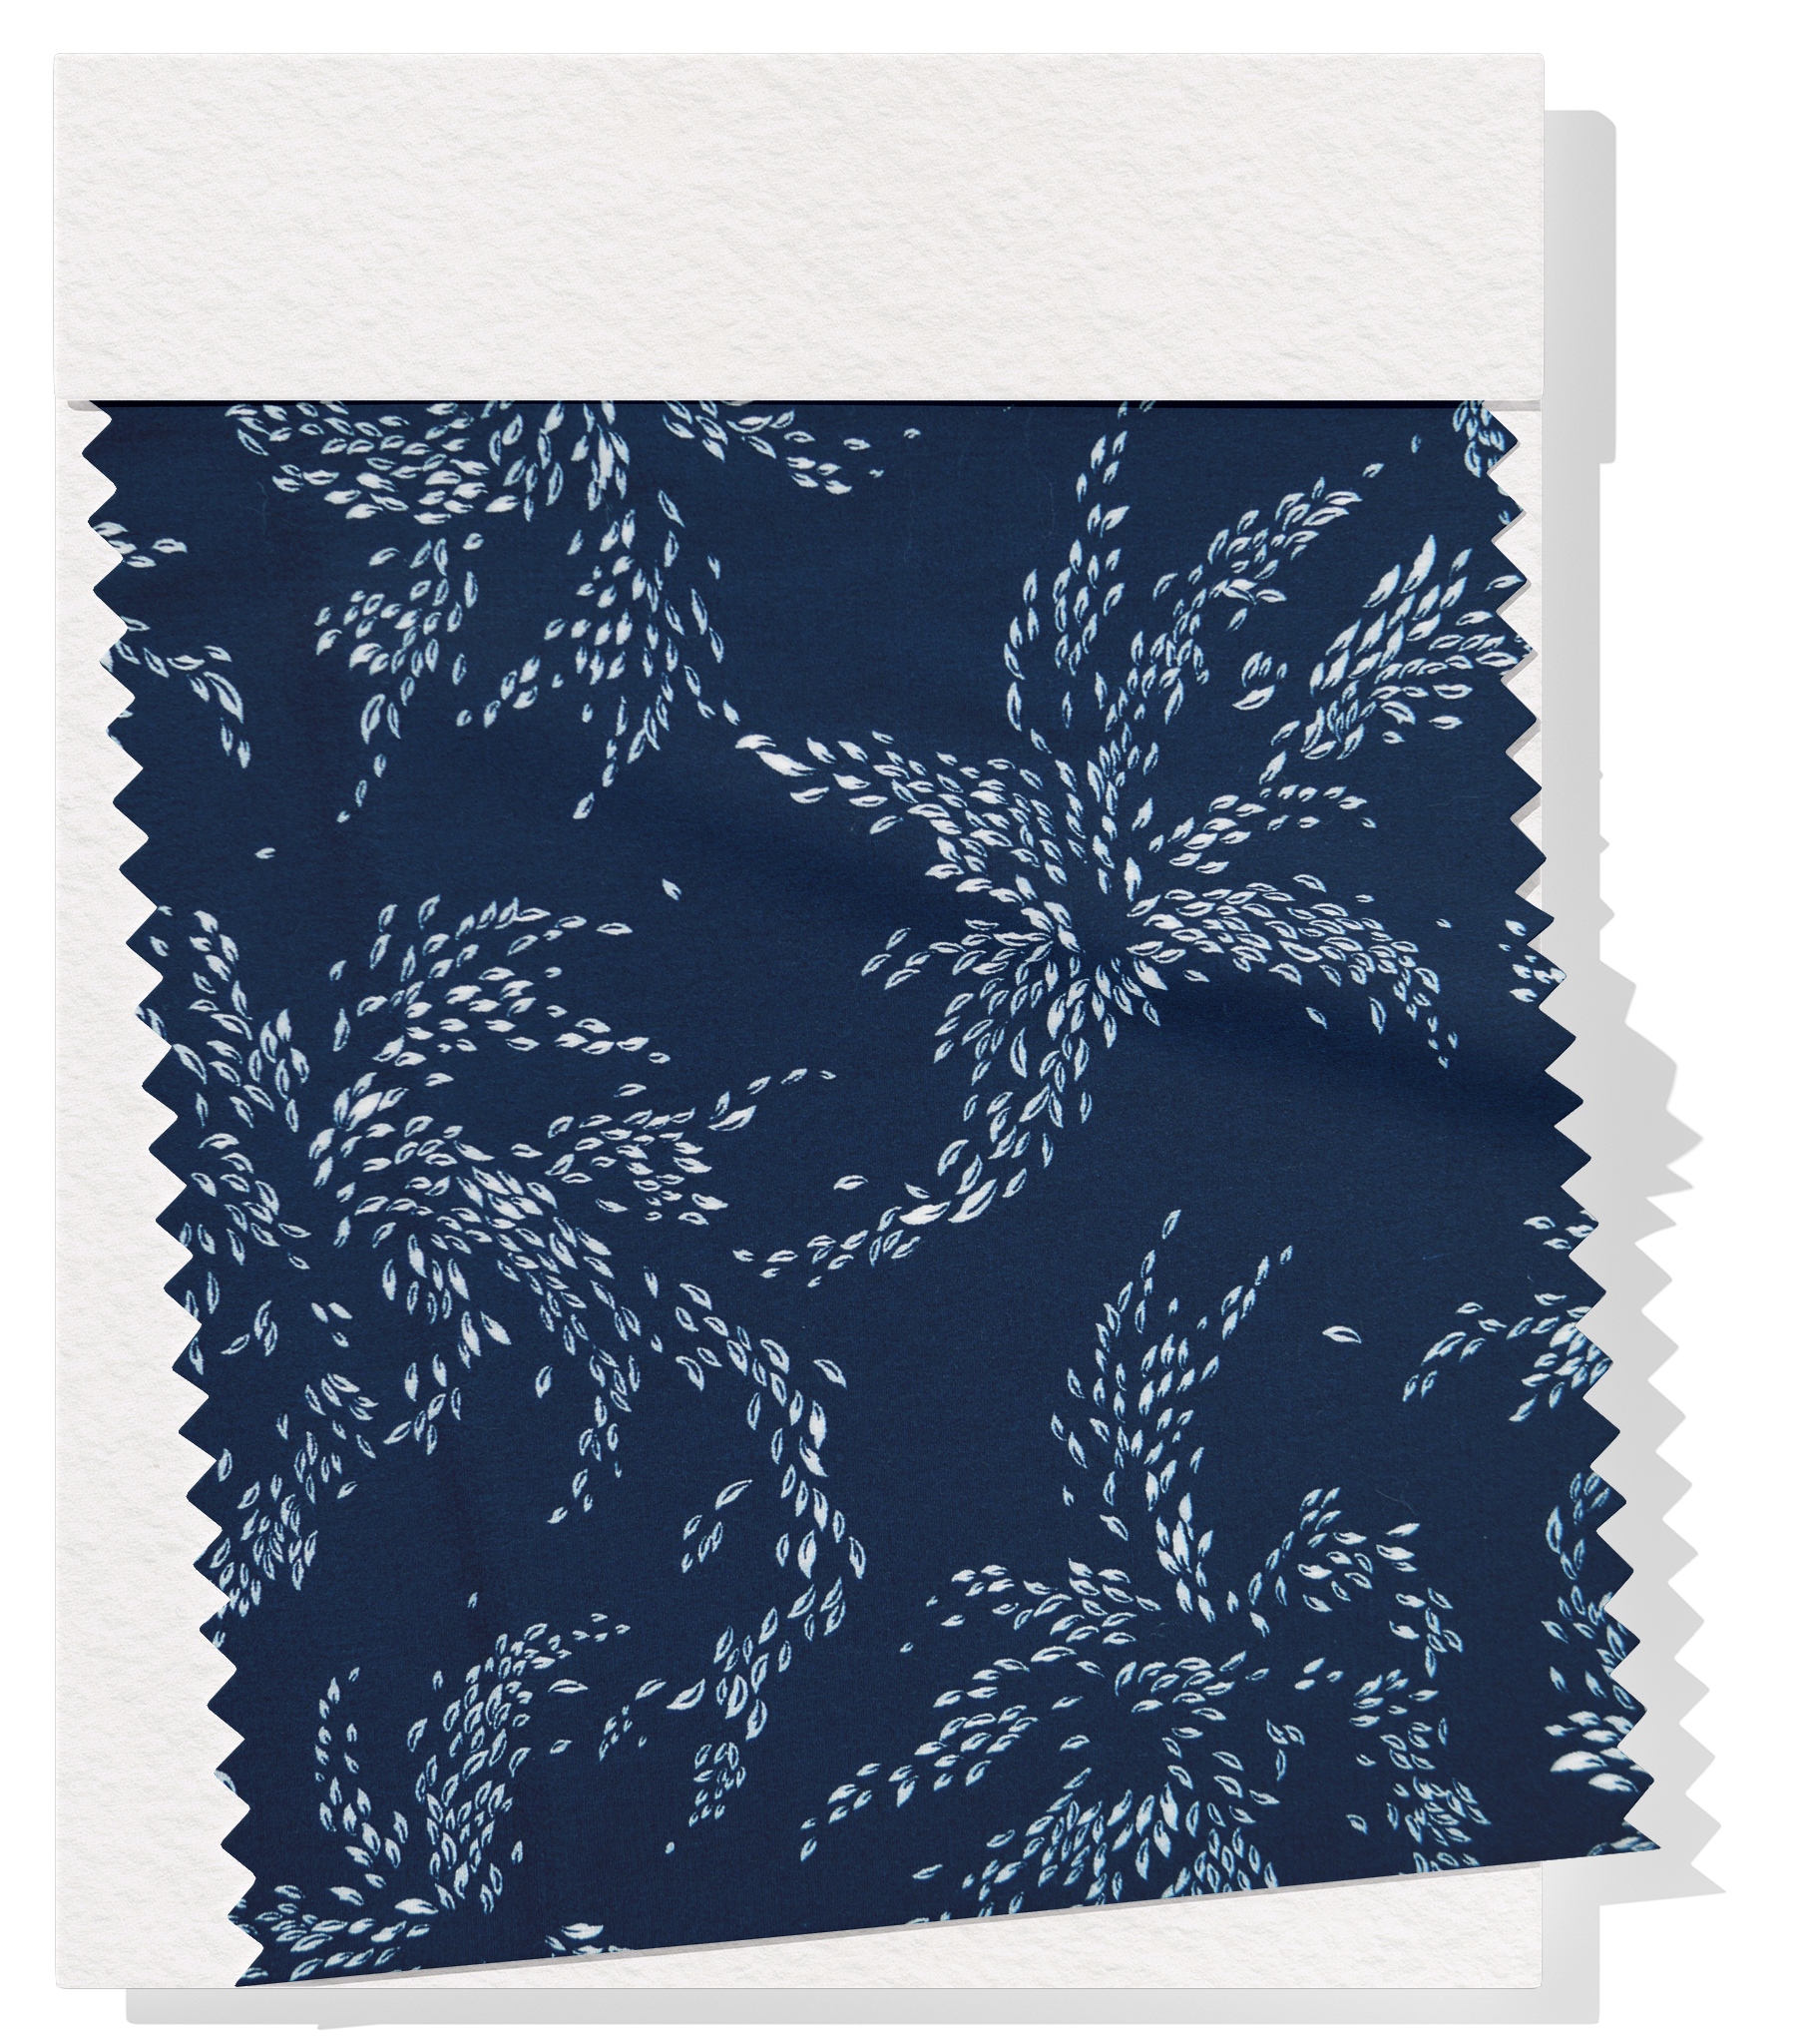 Viscose Crepe Print $22.00p/m - Blue Leaf Floral